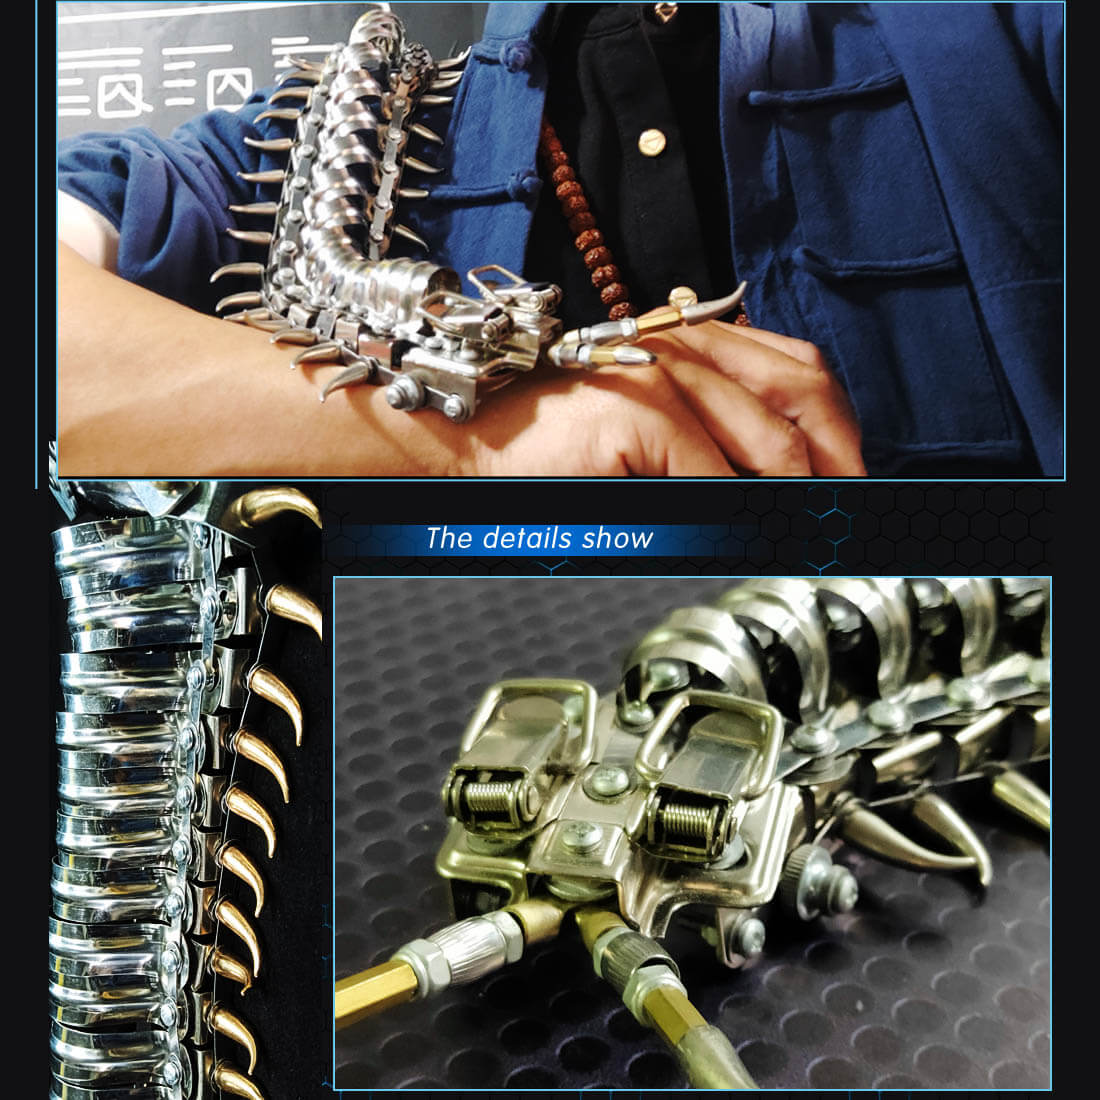 Mechanical Flying Centipede 3D Metal Model Kits Ornament